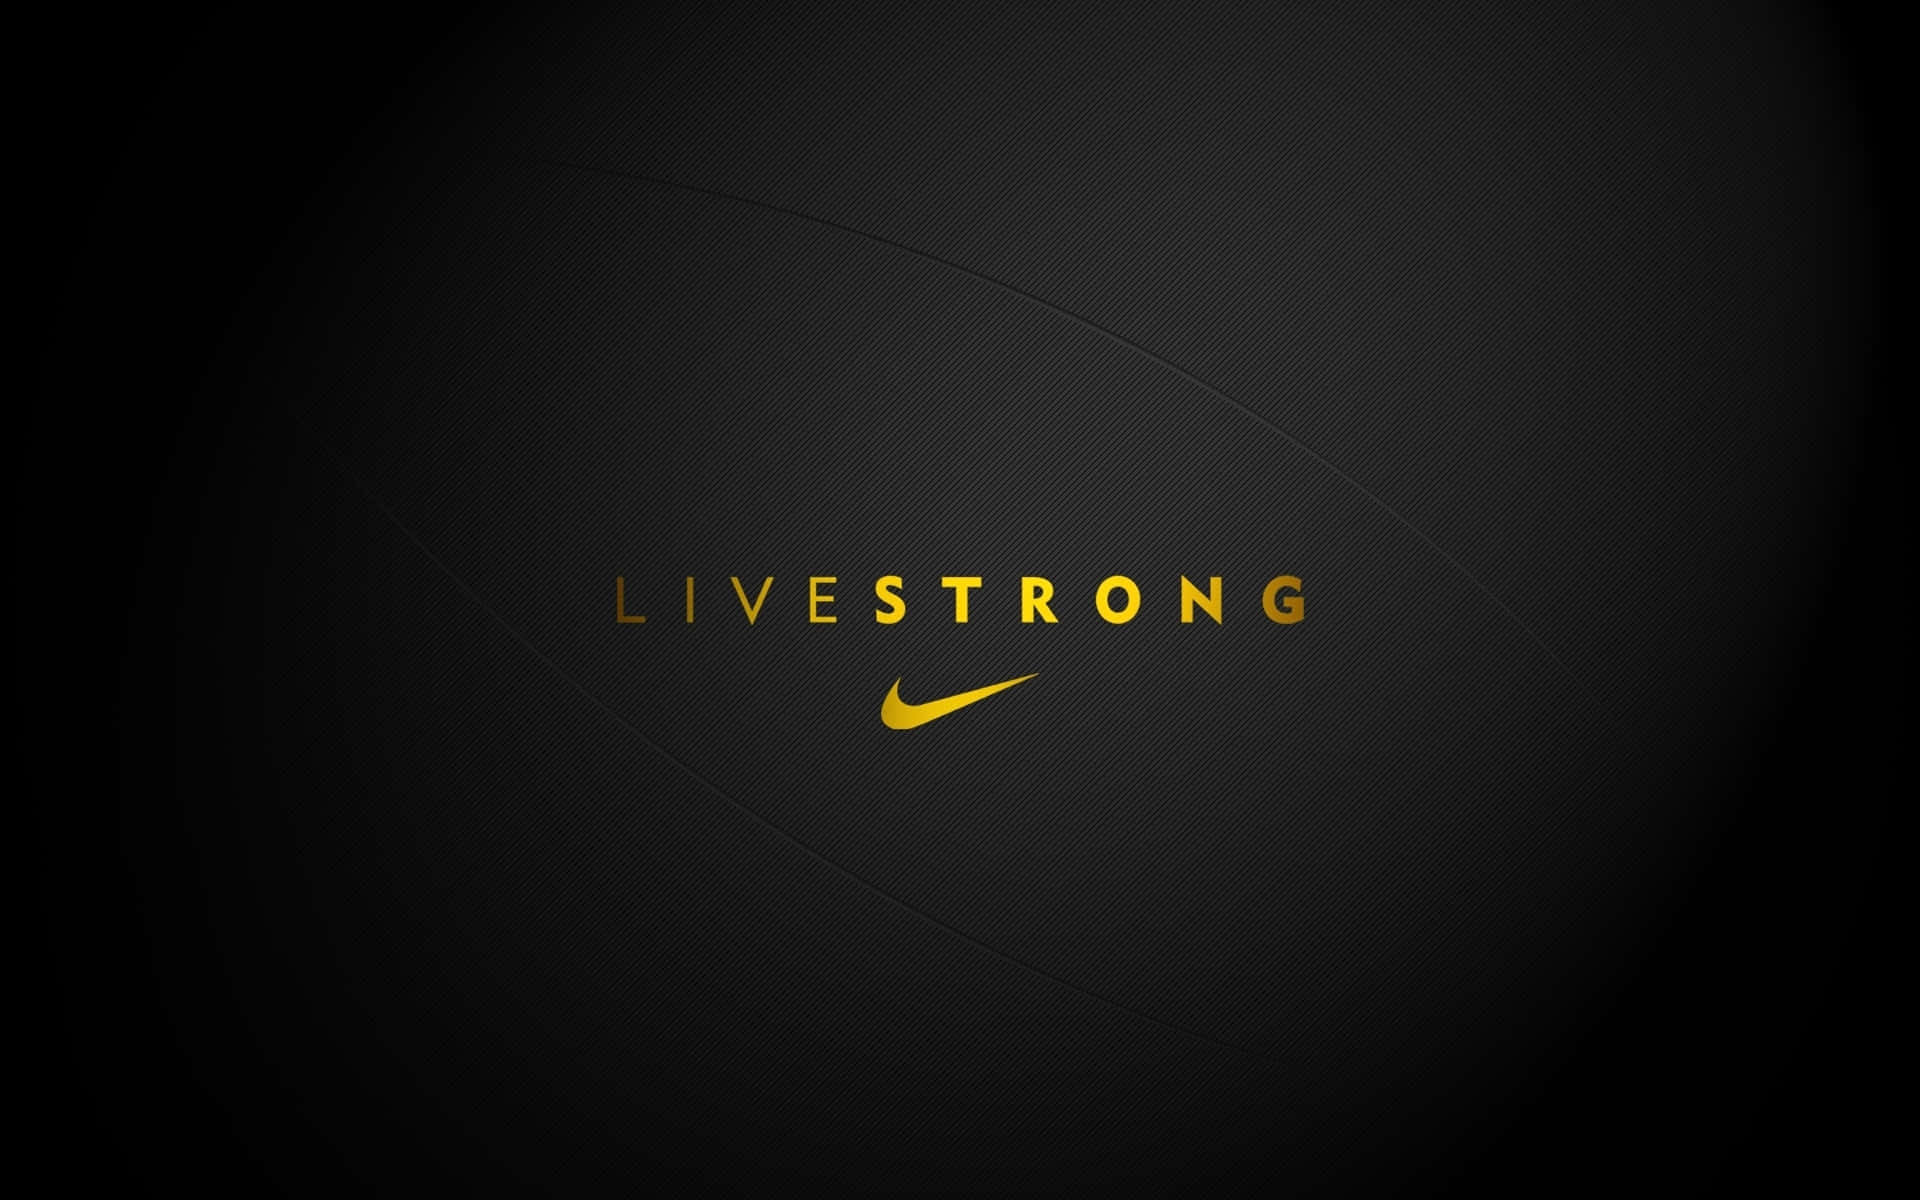 A glimpse of the iconic Nike swoosh logo